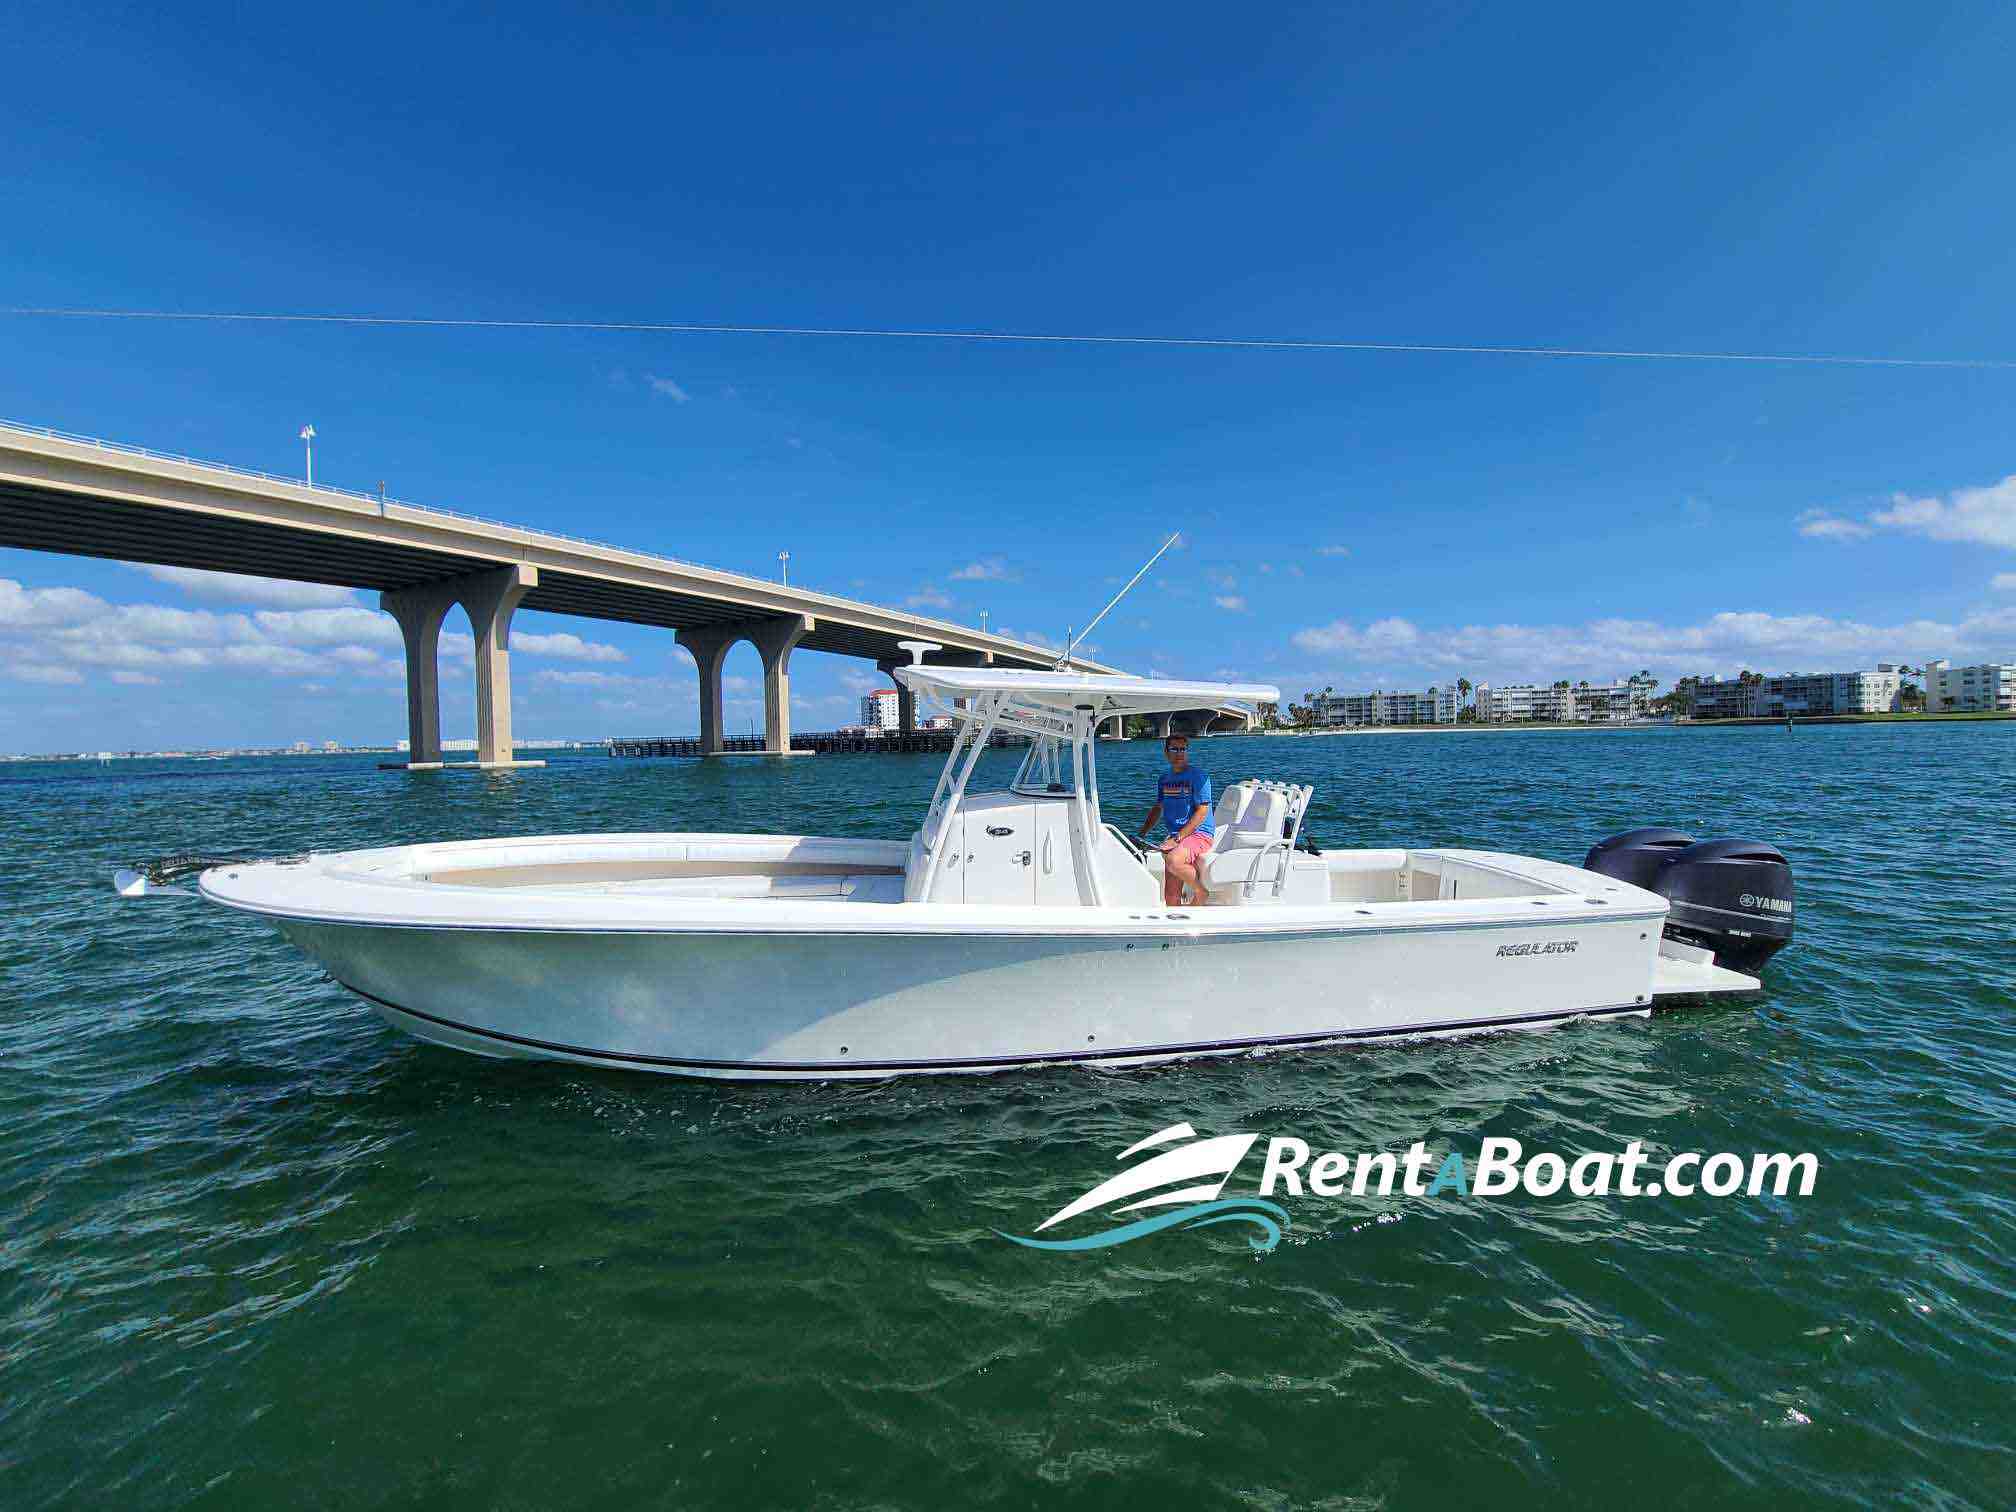 Redemption boat rentals Florida SAINT PETERSBURG Florida  Regulator 34SS 2012 34 